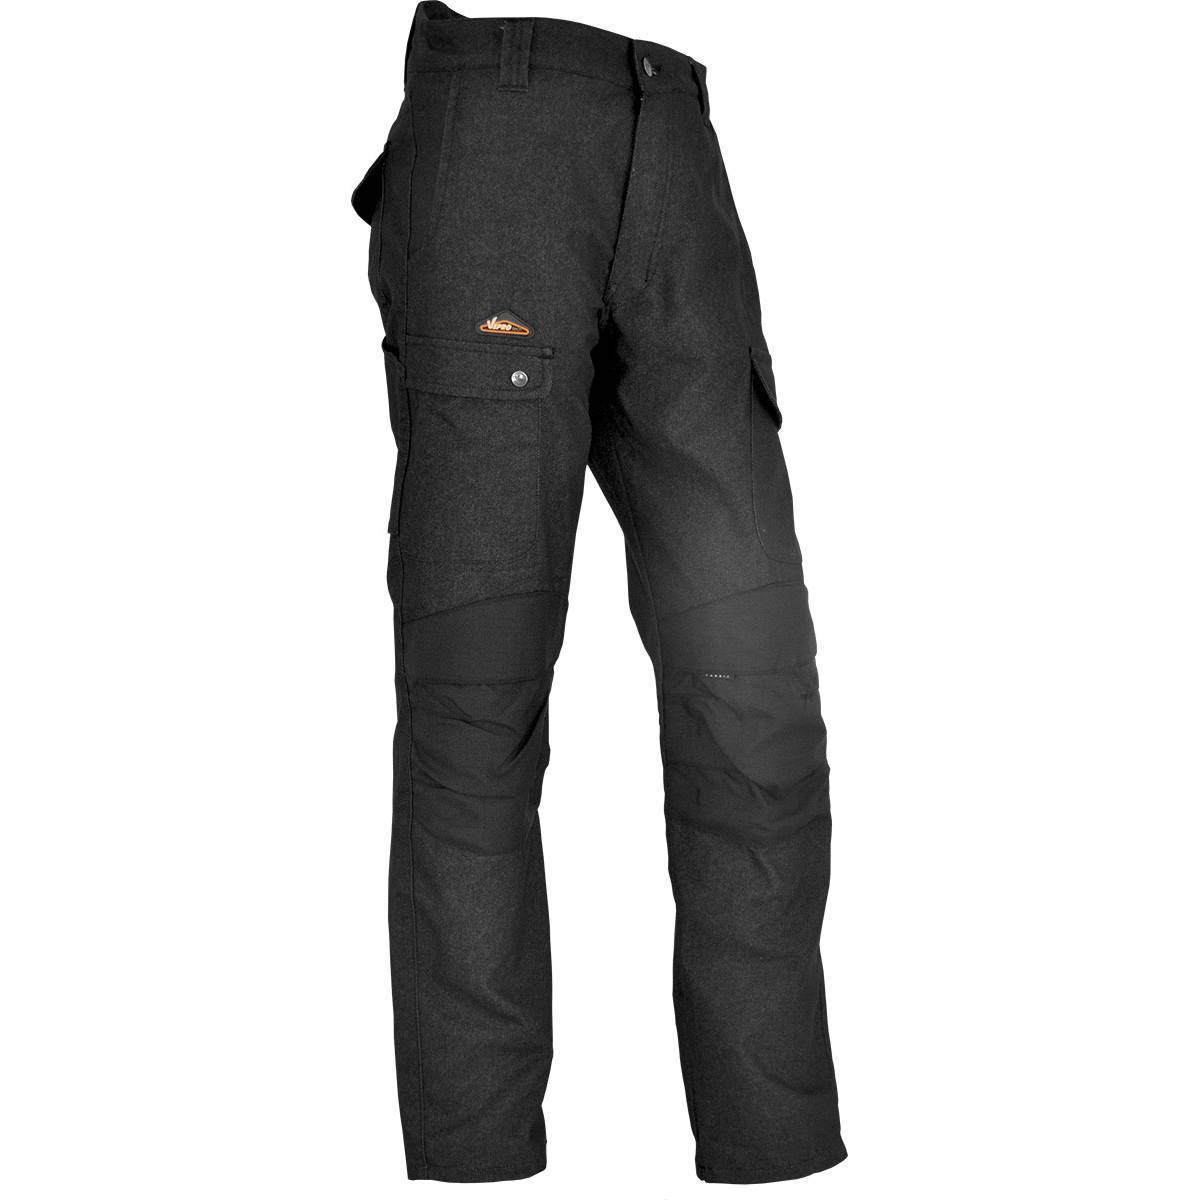 ENDU work trousers size 40, black